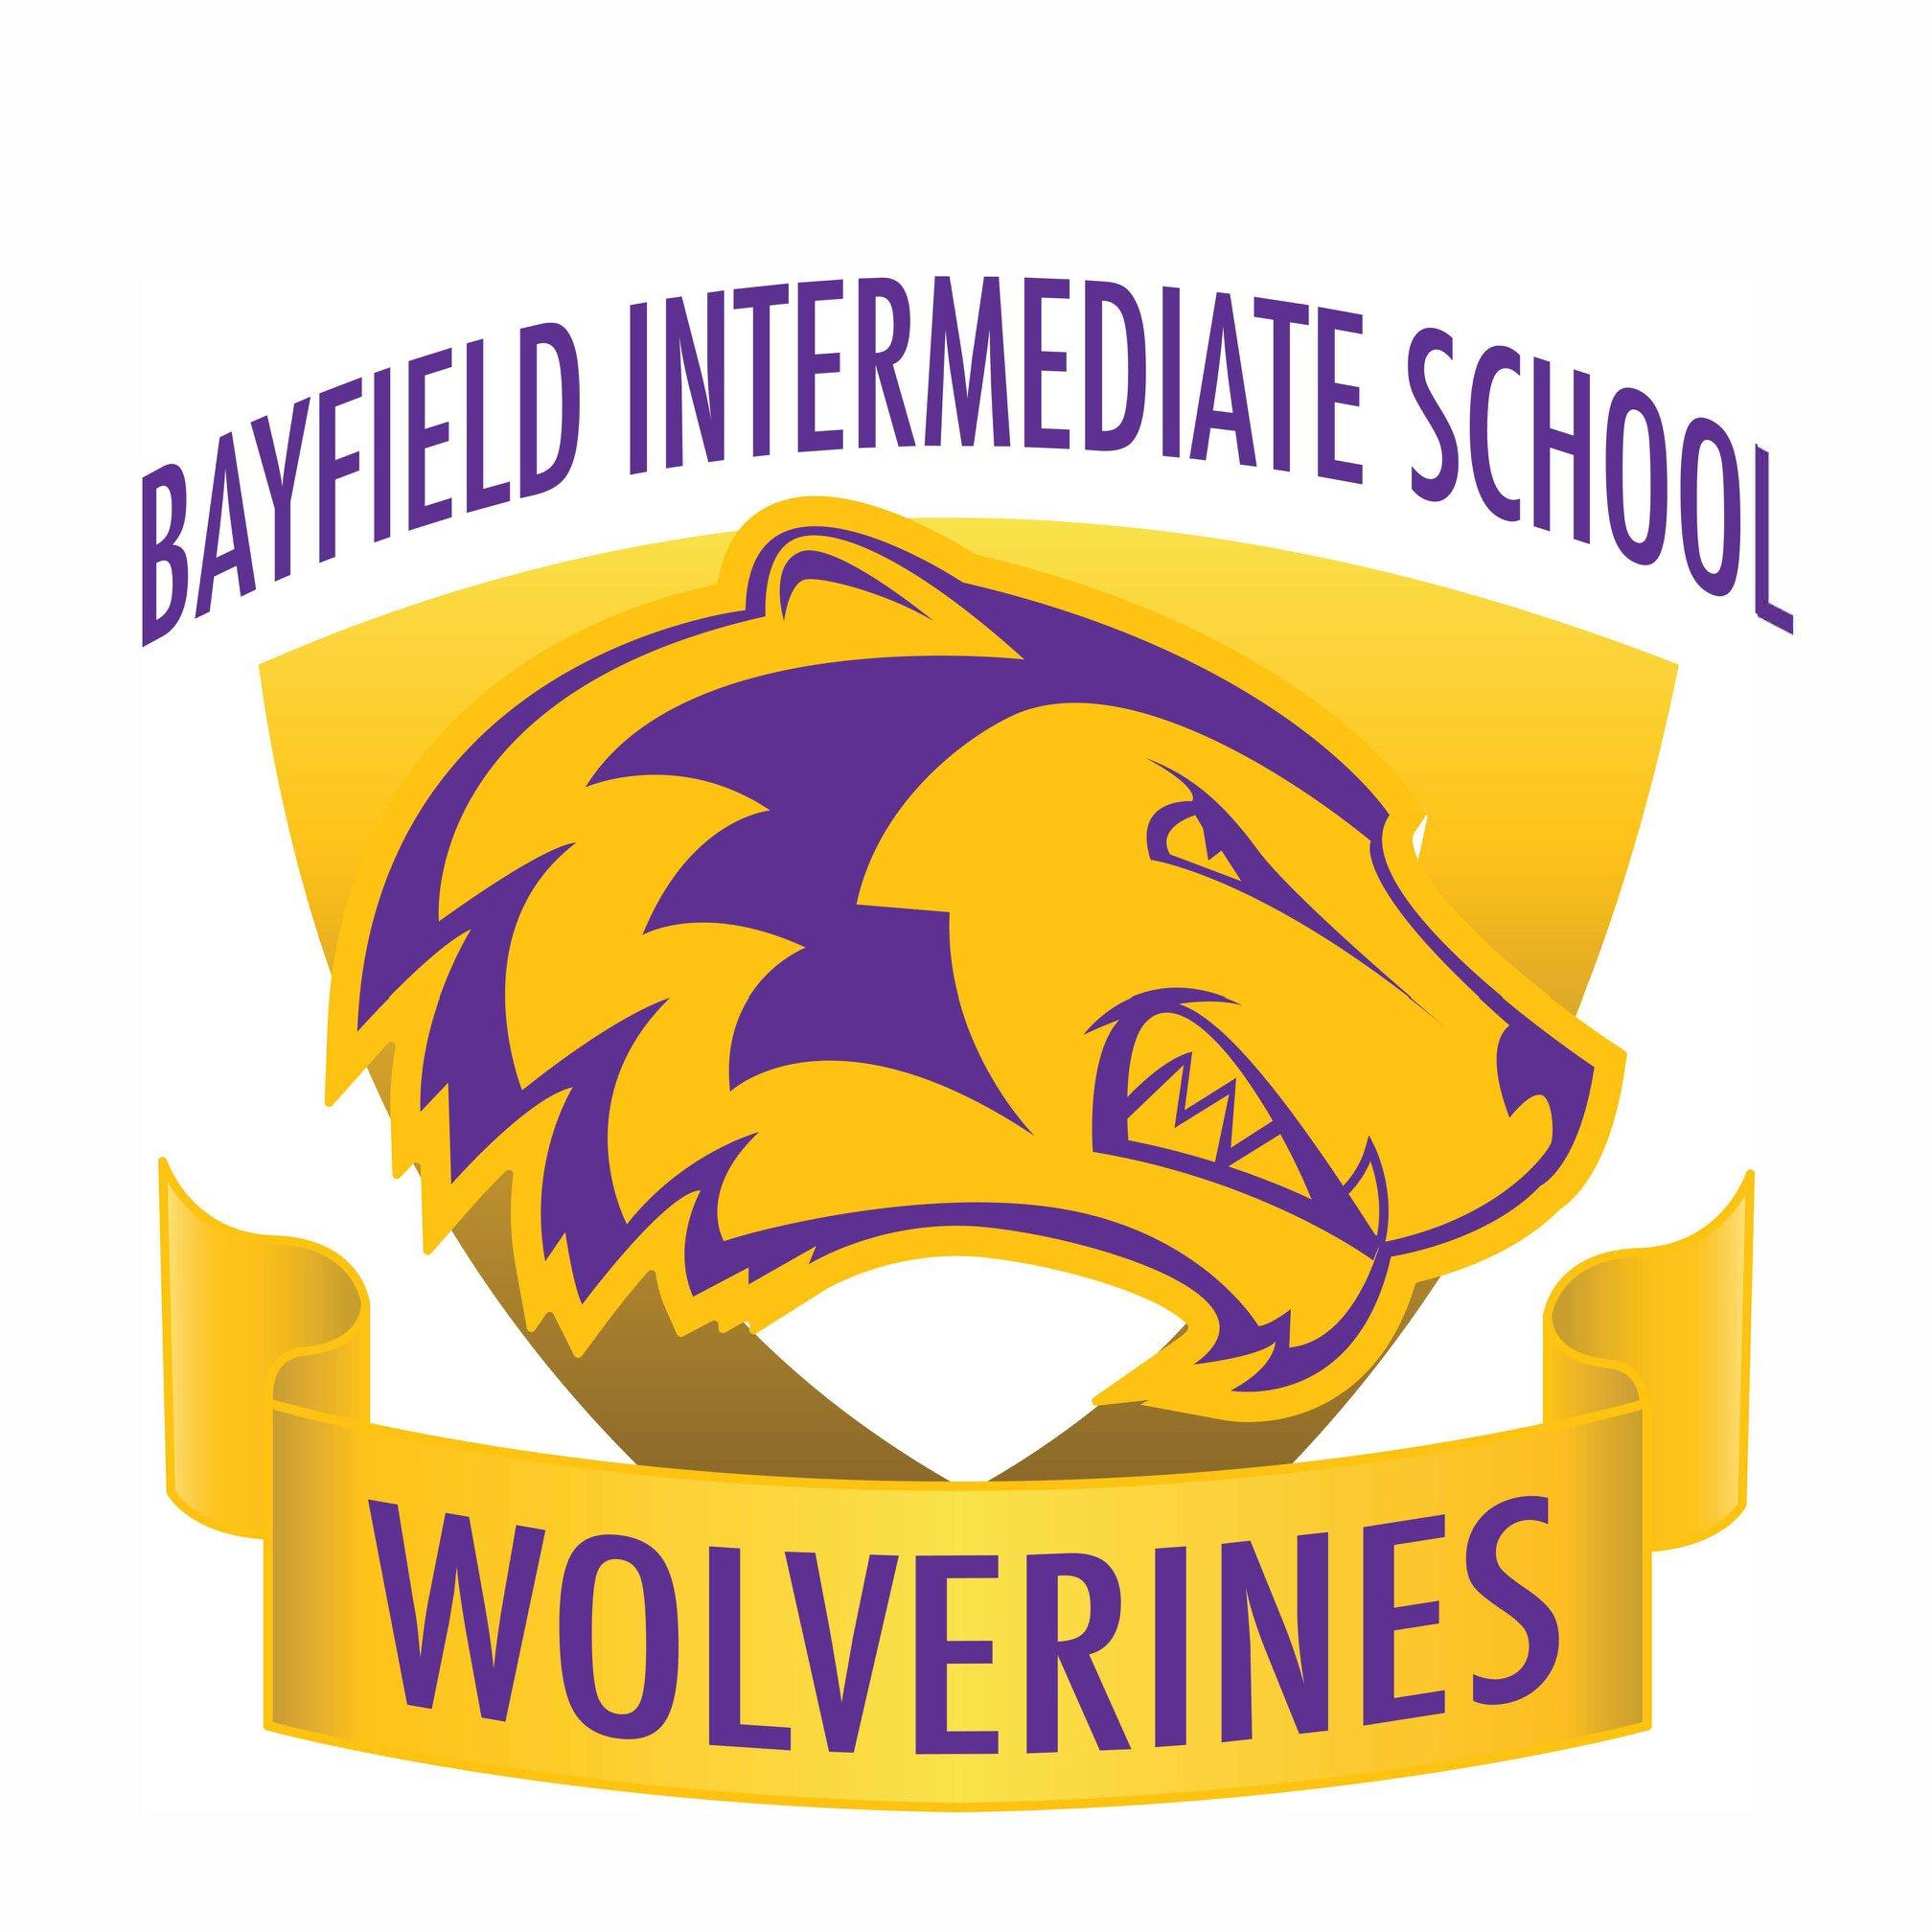 Bayfield Intermediate School